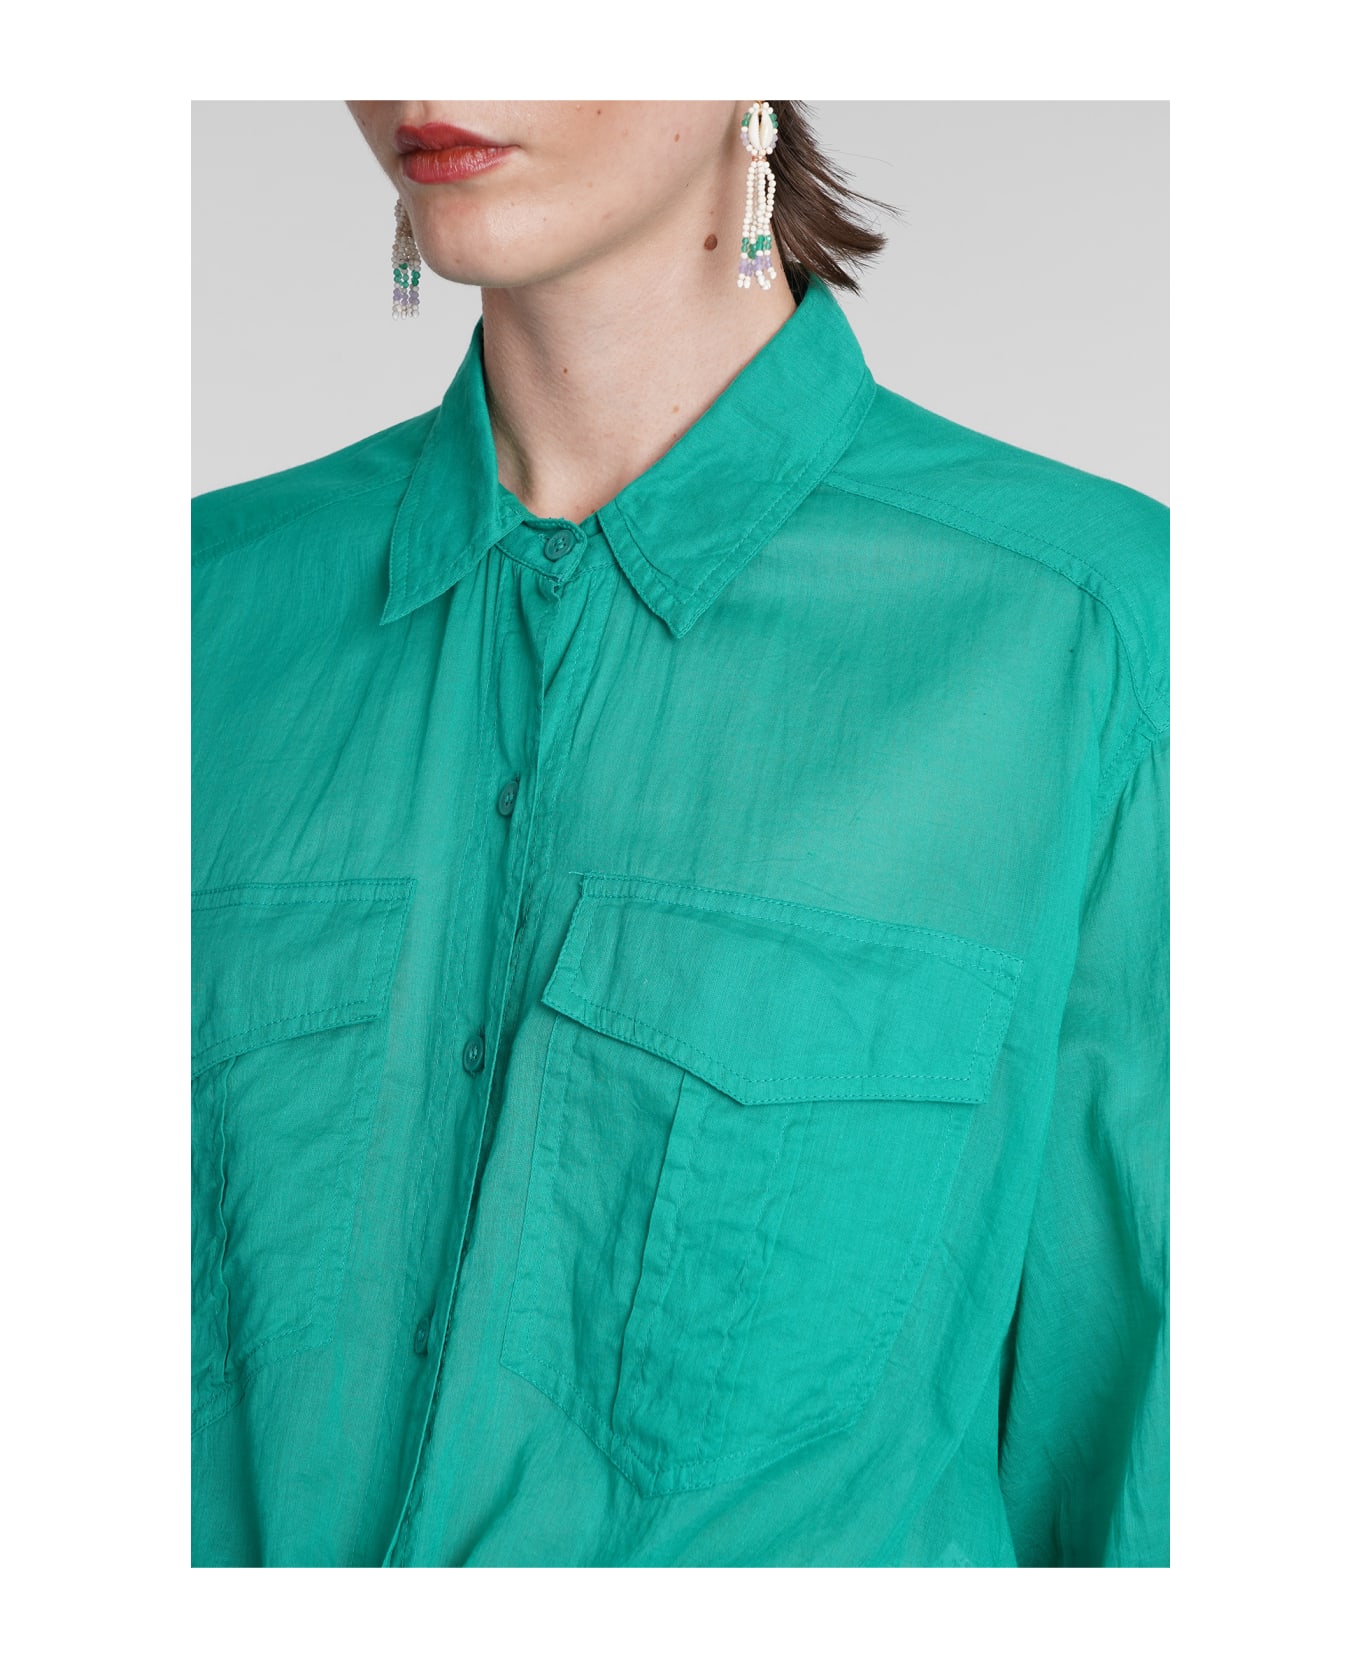 Marant Étoile Nath Shirt - green ブラウス